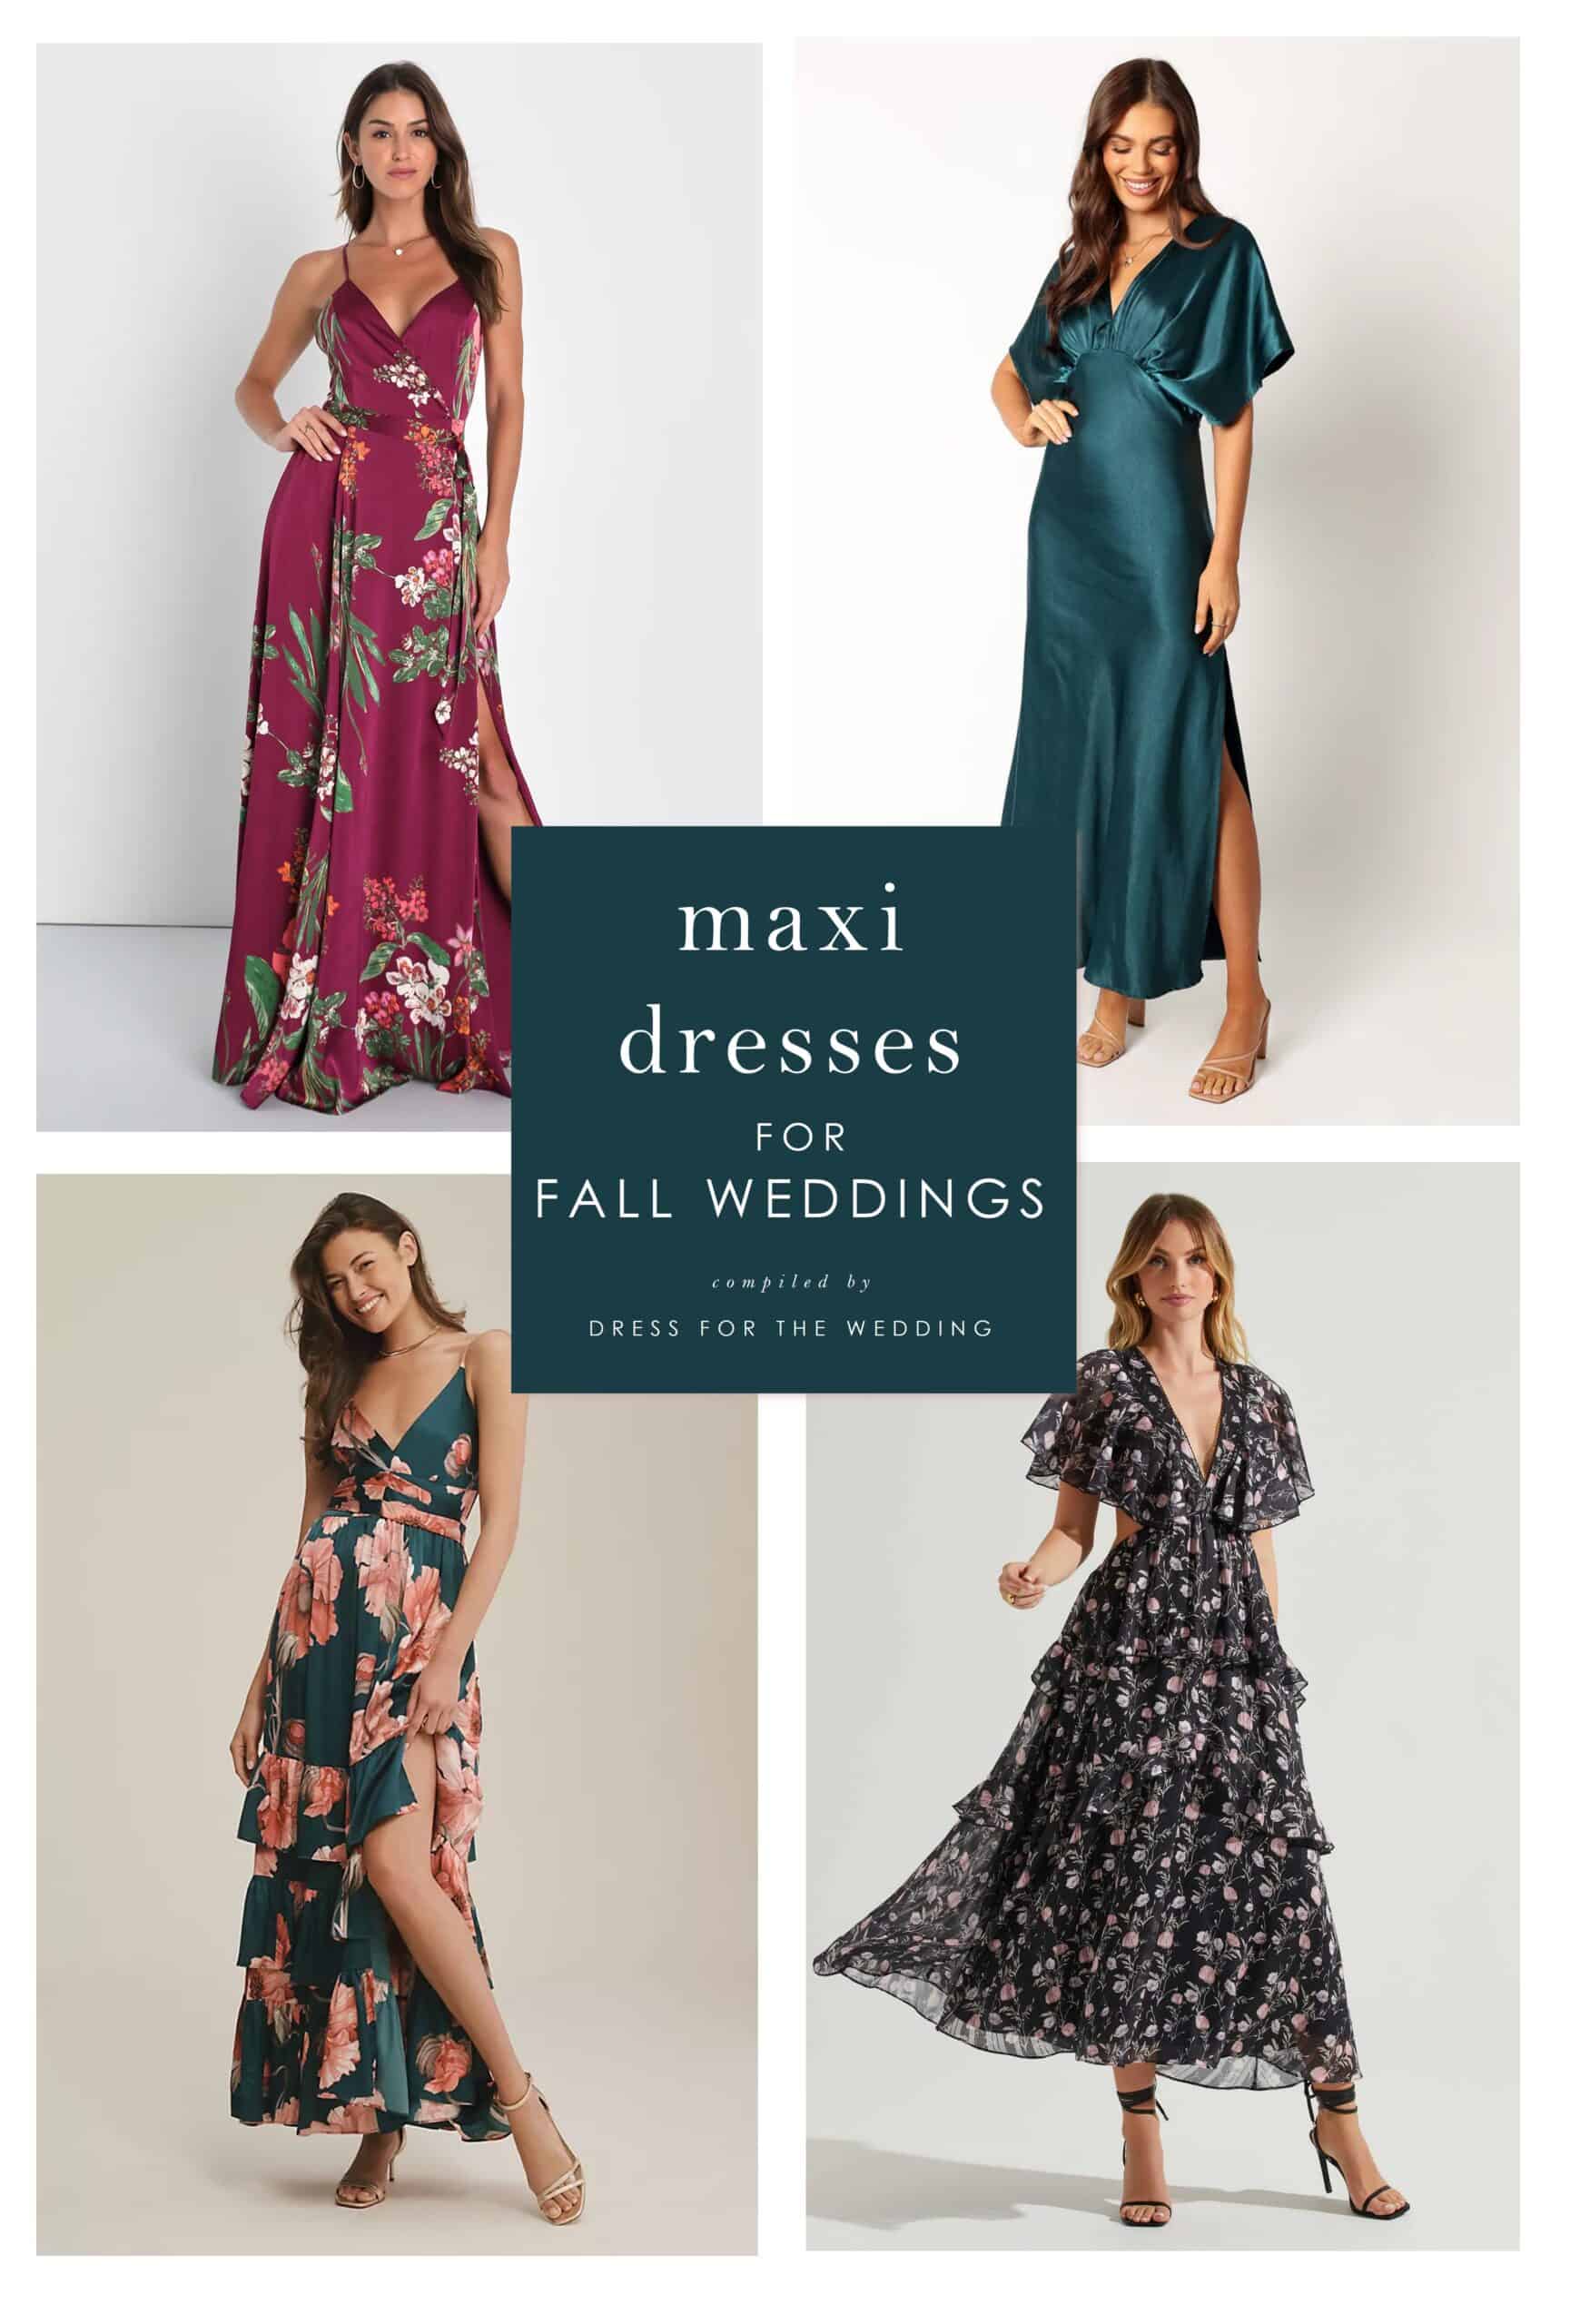 maxi dresses for fall